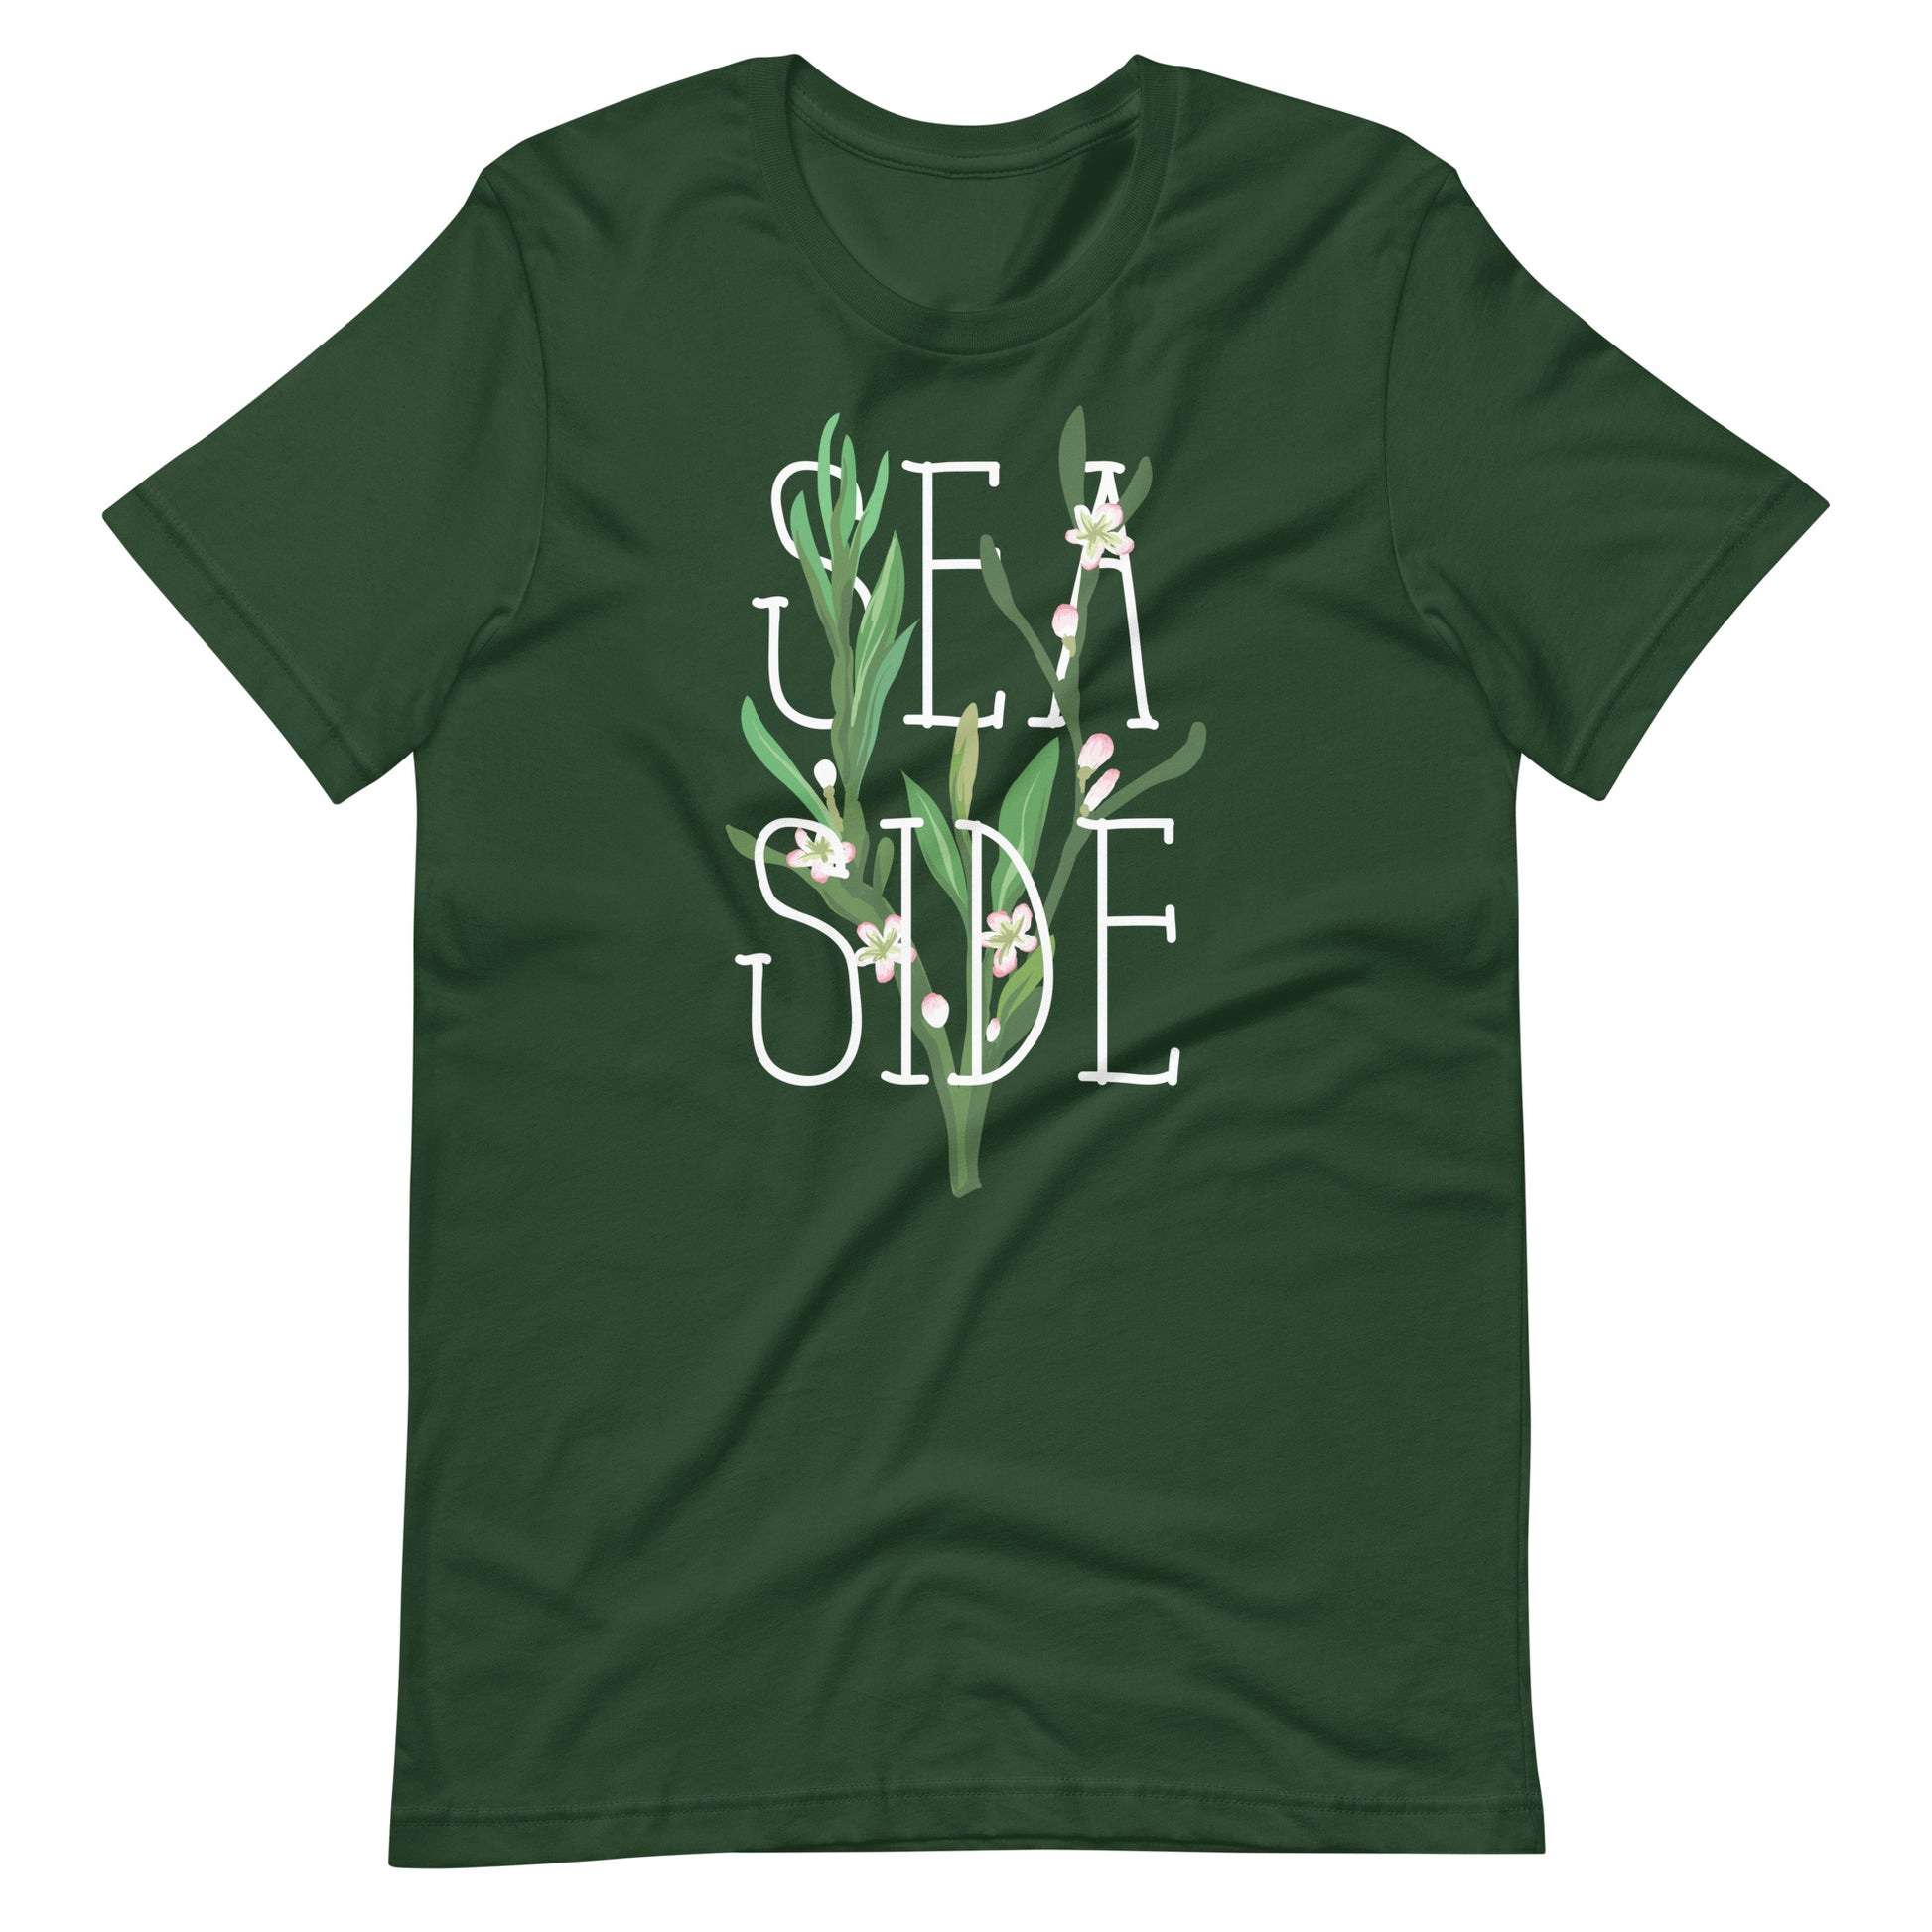 Printagon - Sea Side - Unisex T-shirt - Forest / S